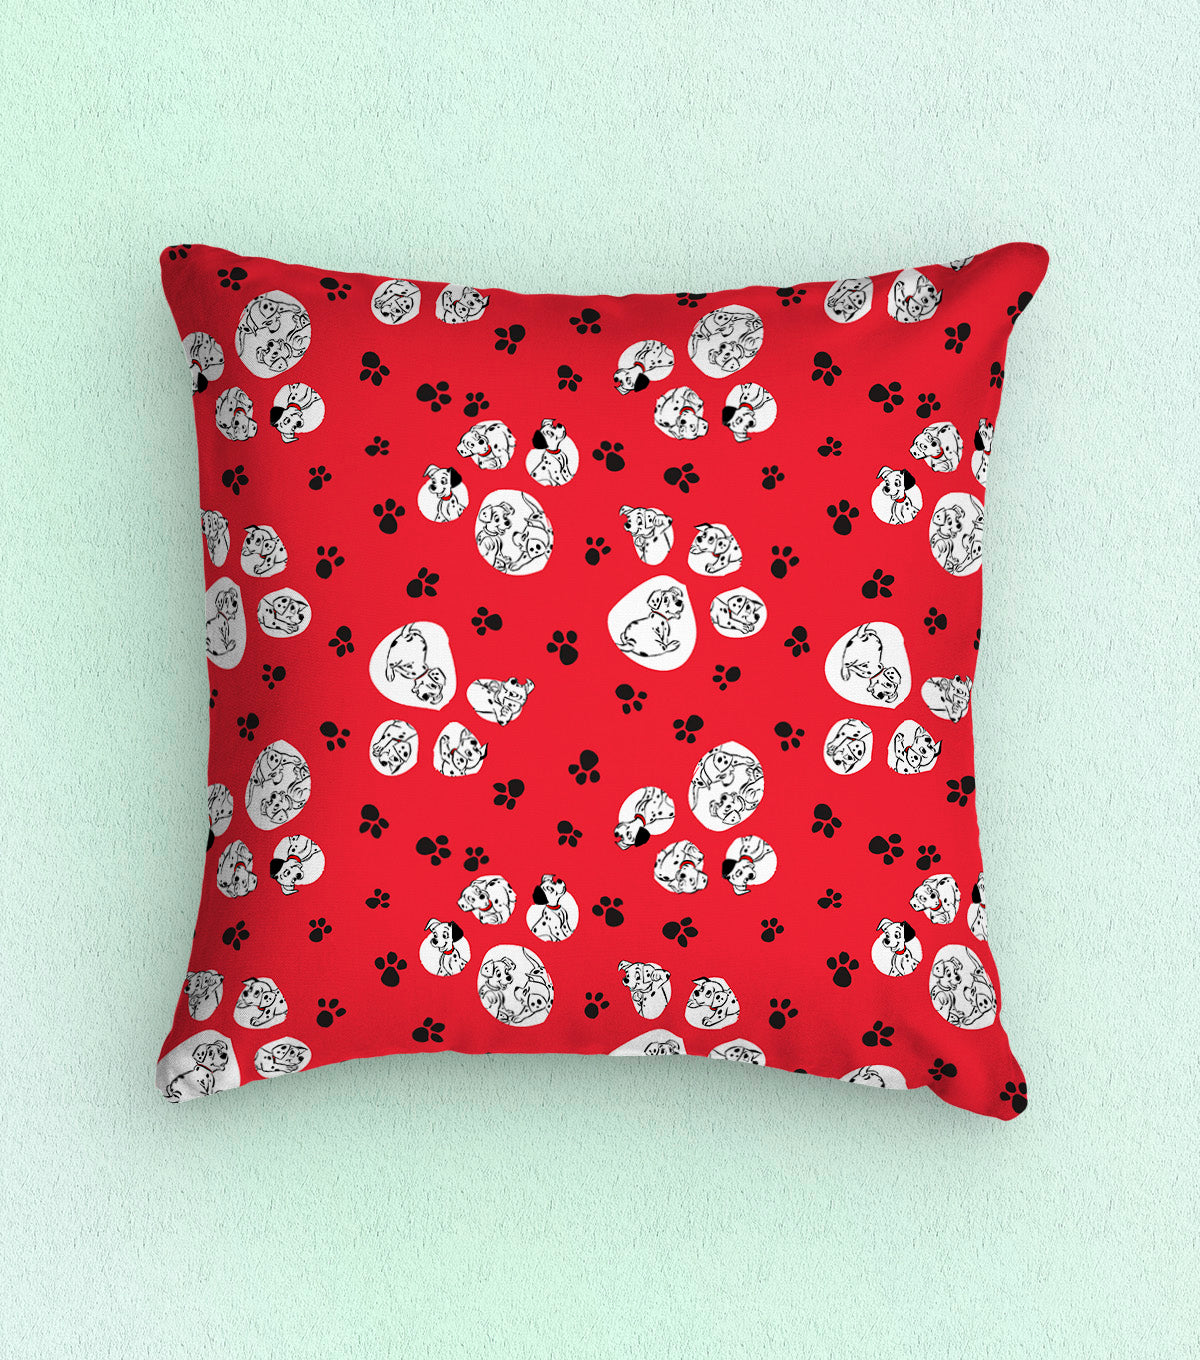 Disney 101 Dalmatians Puppy Paws Print Fabric